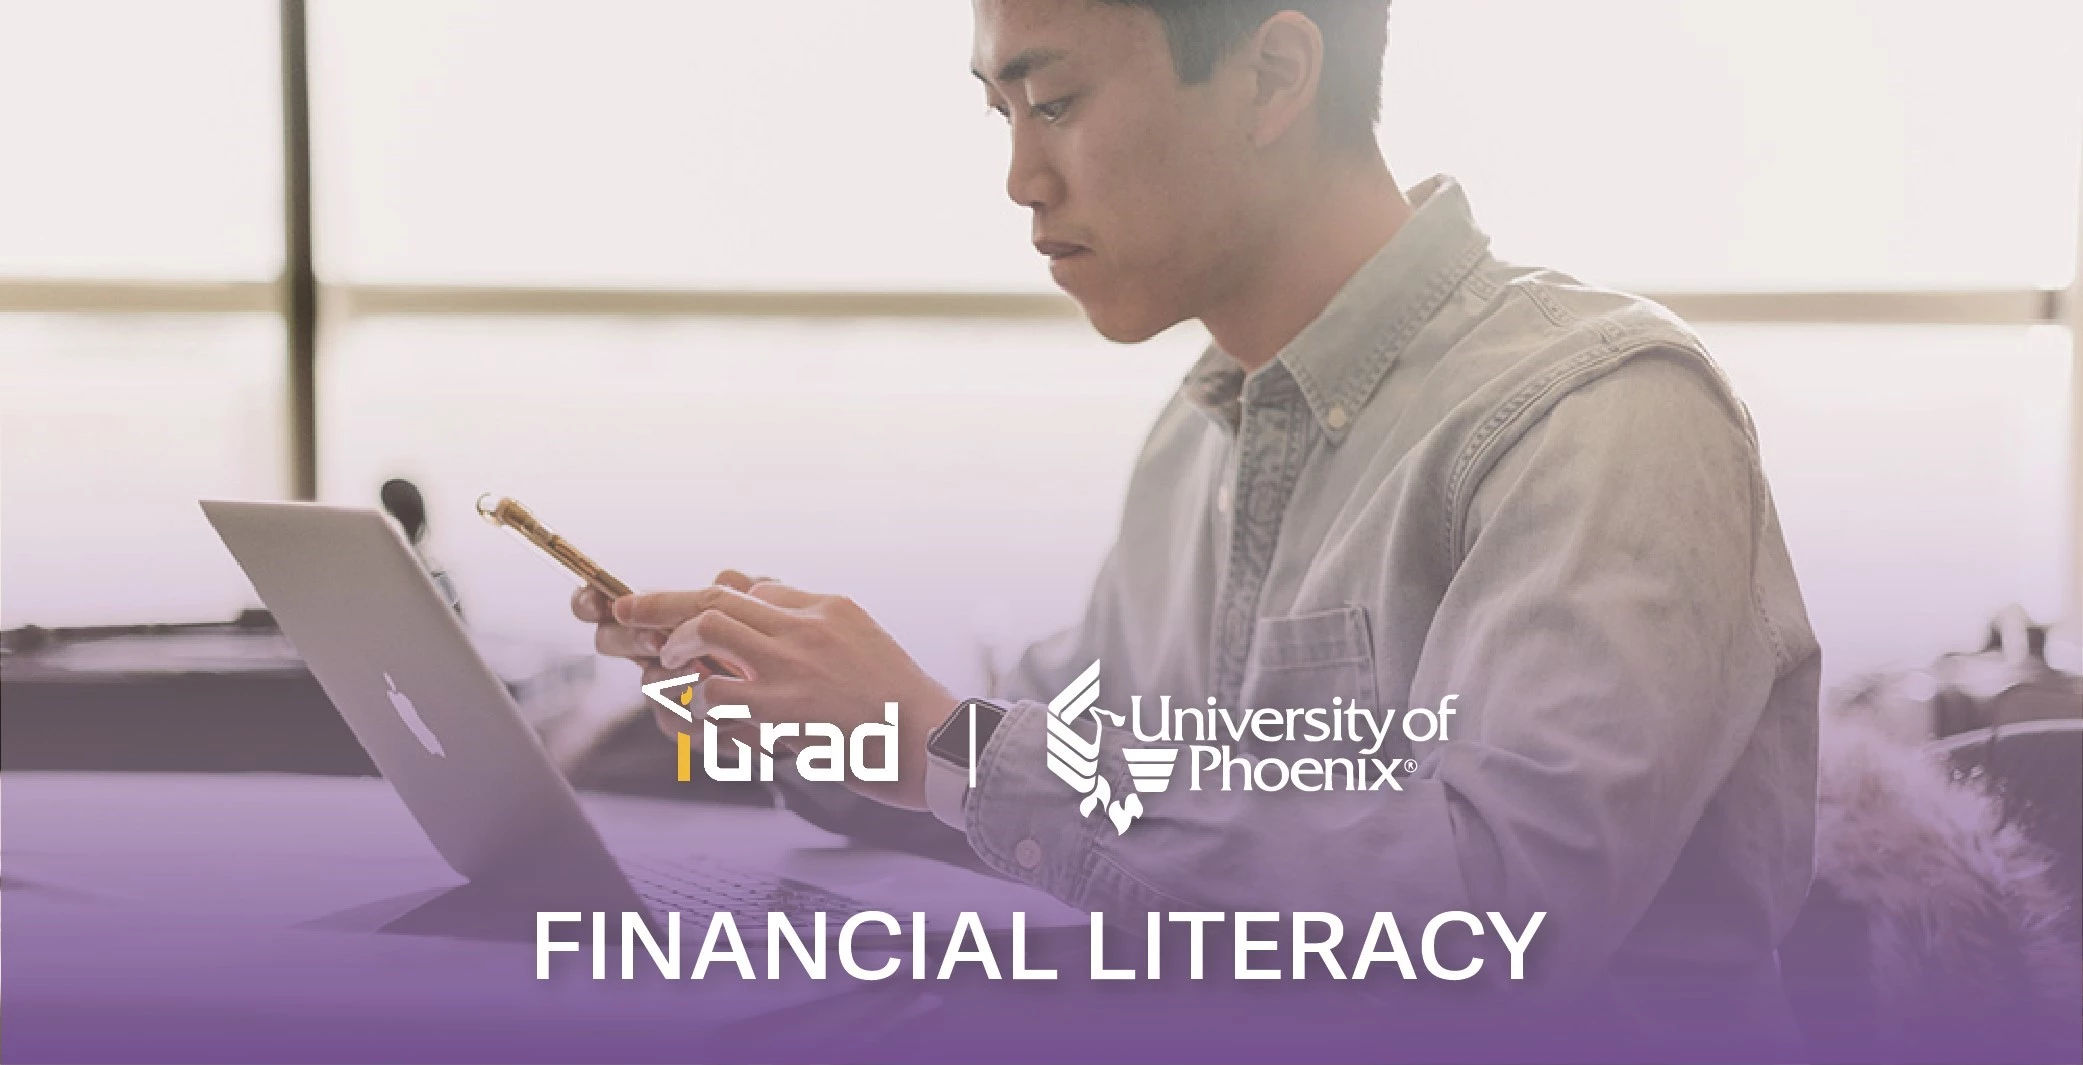 igrad and university of phoenix financial literacy